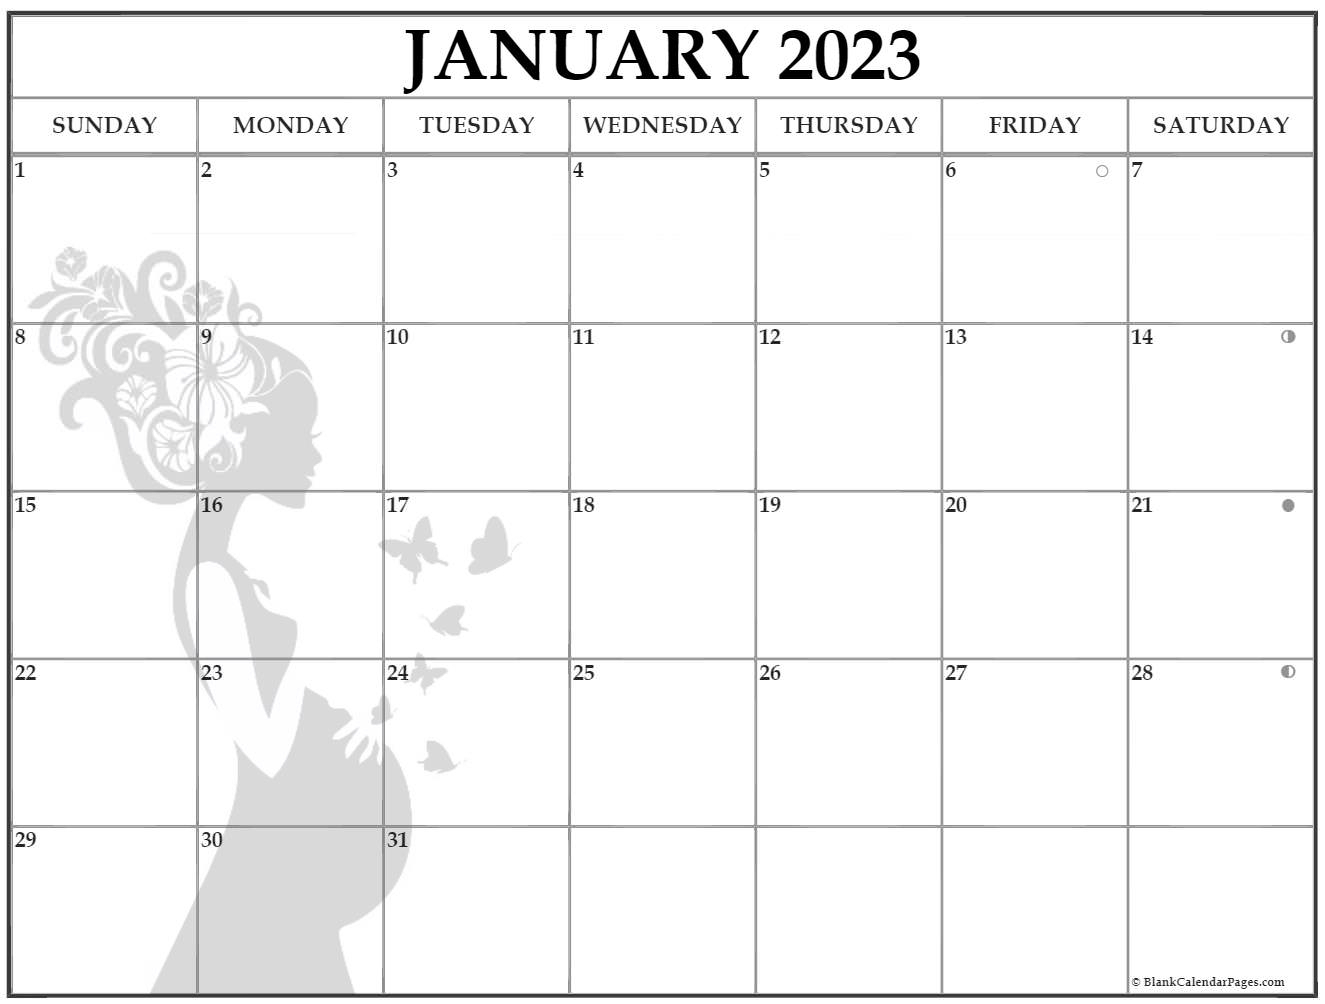 Take Calendar December 2022 January 2023